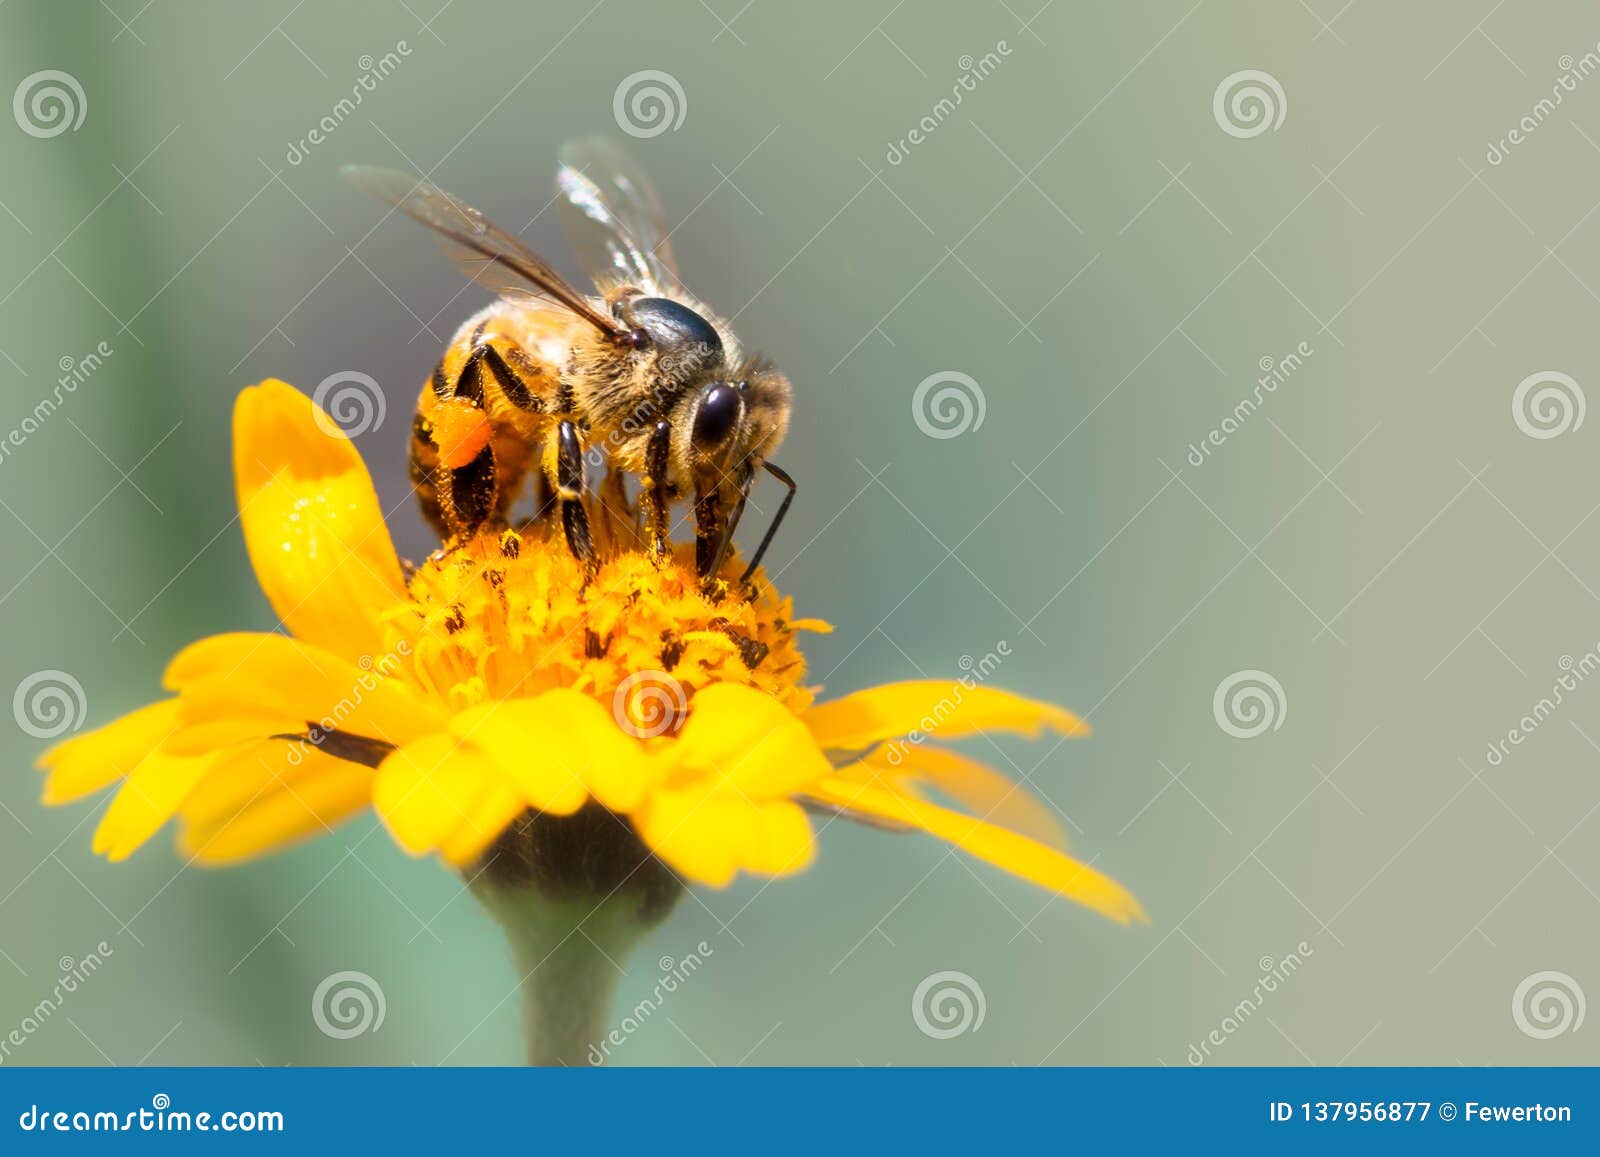 honey bee pollinator close up macro photo. bee is drinking nectar from yellow wild flower with proboscis